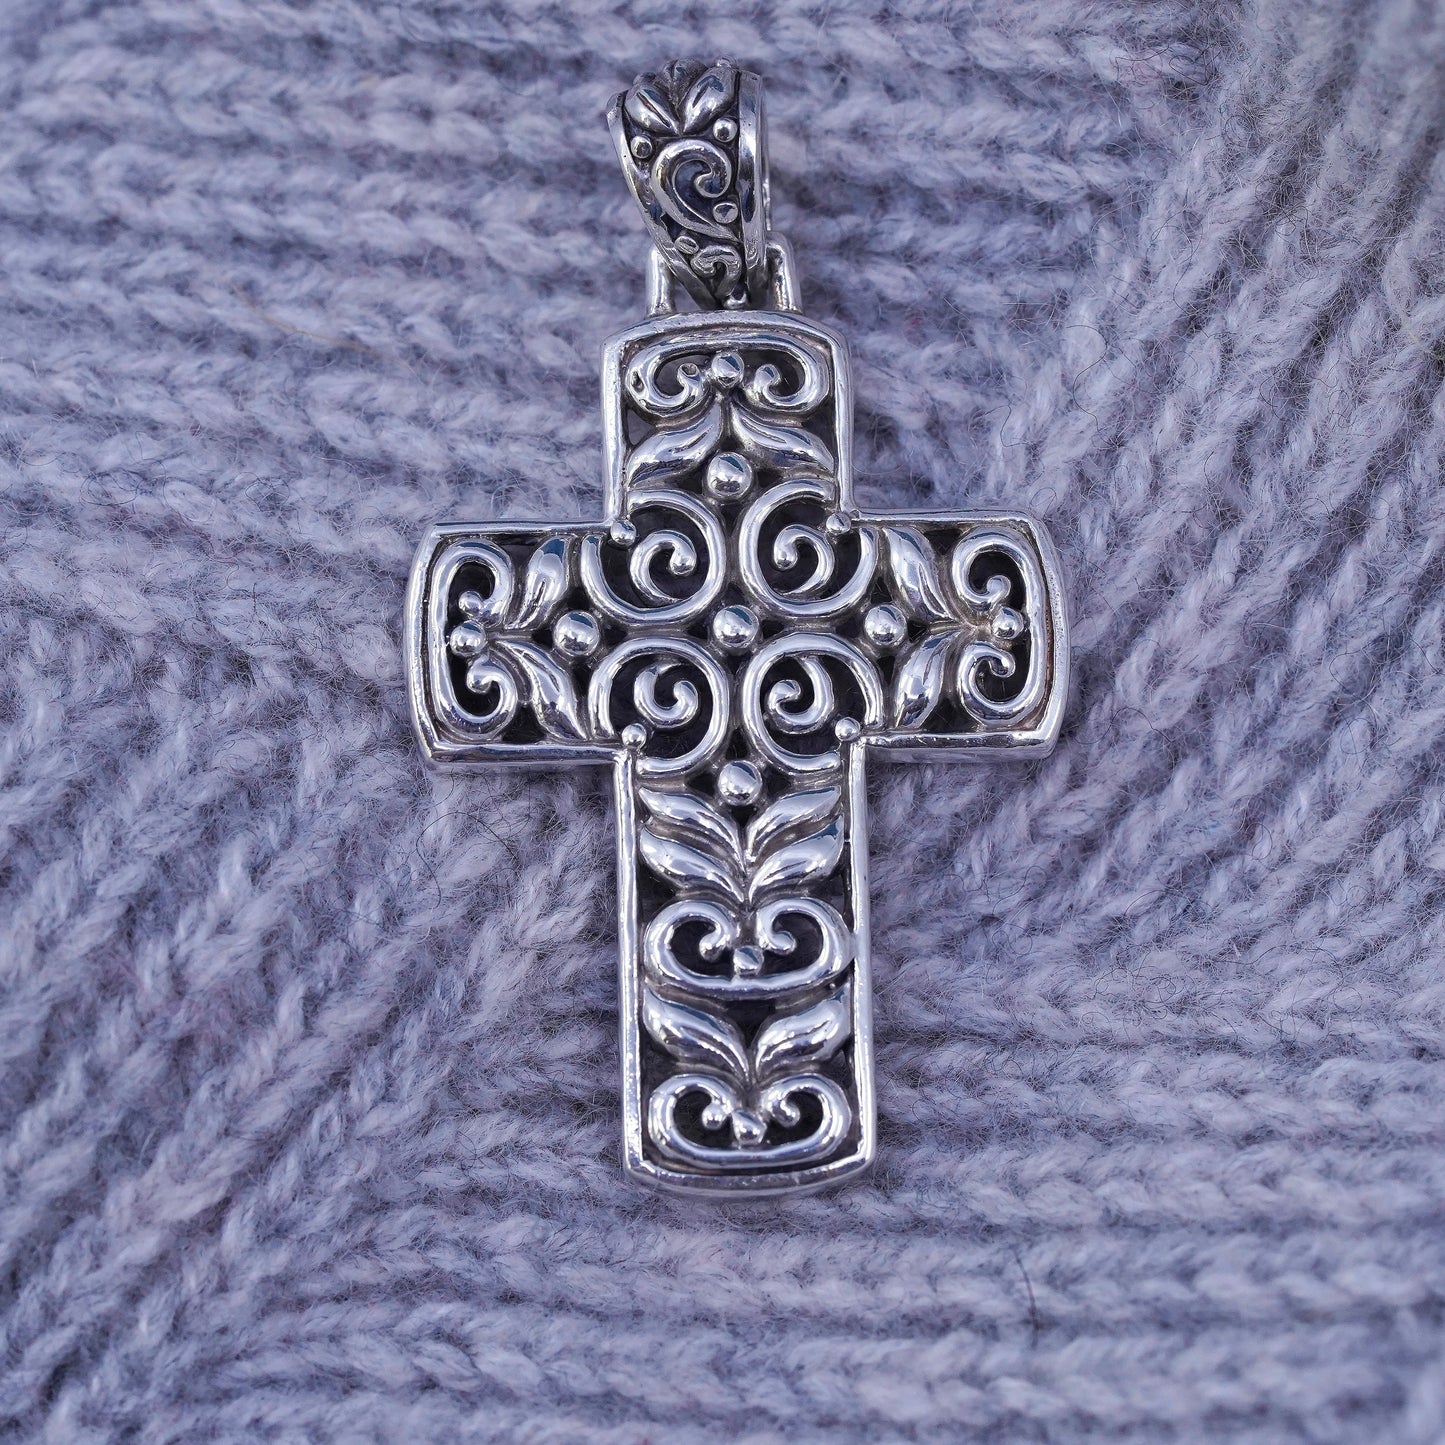 Vintage Sterling silver handmade pendant, 925 filigree cross charm